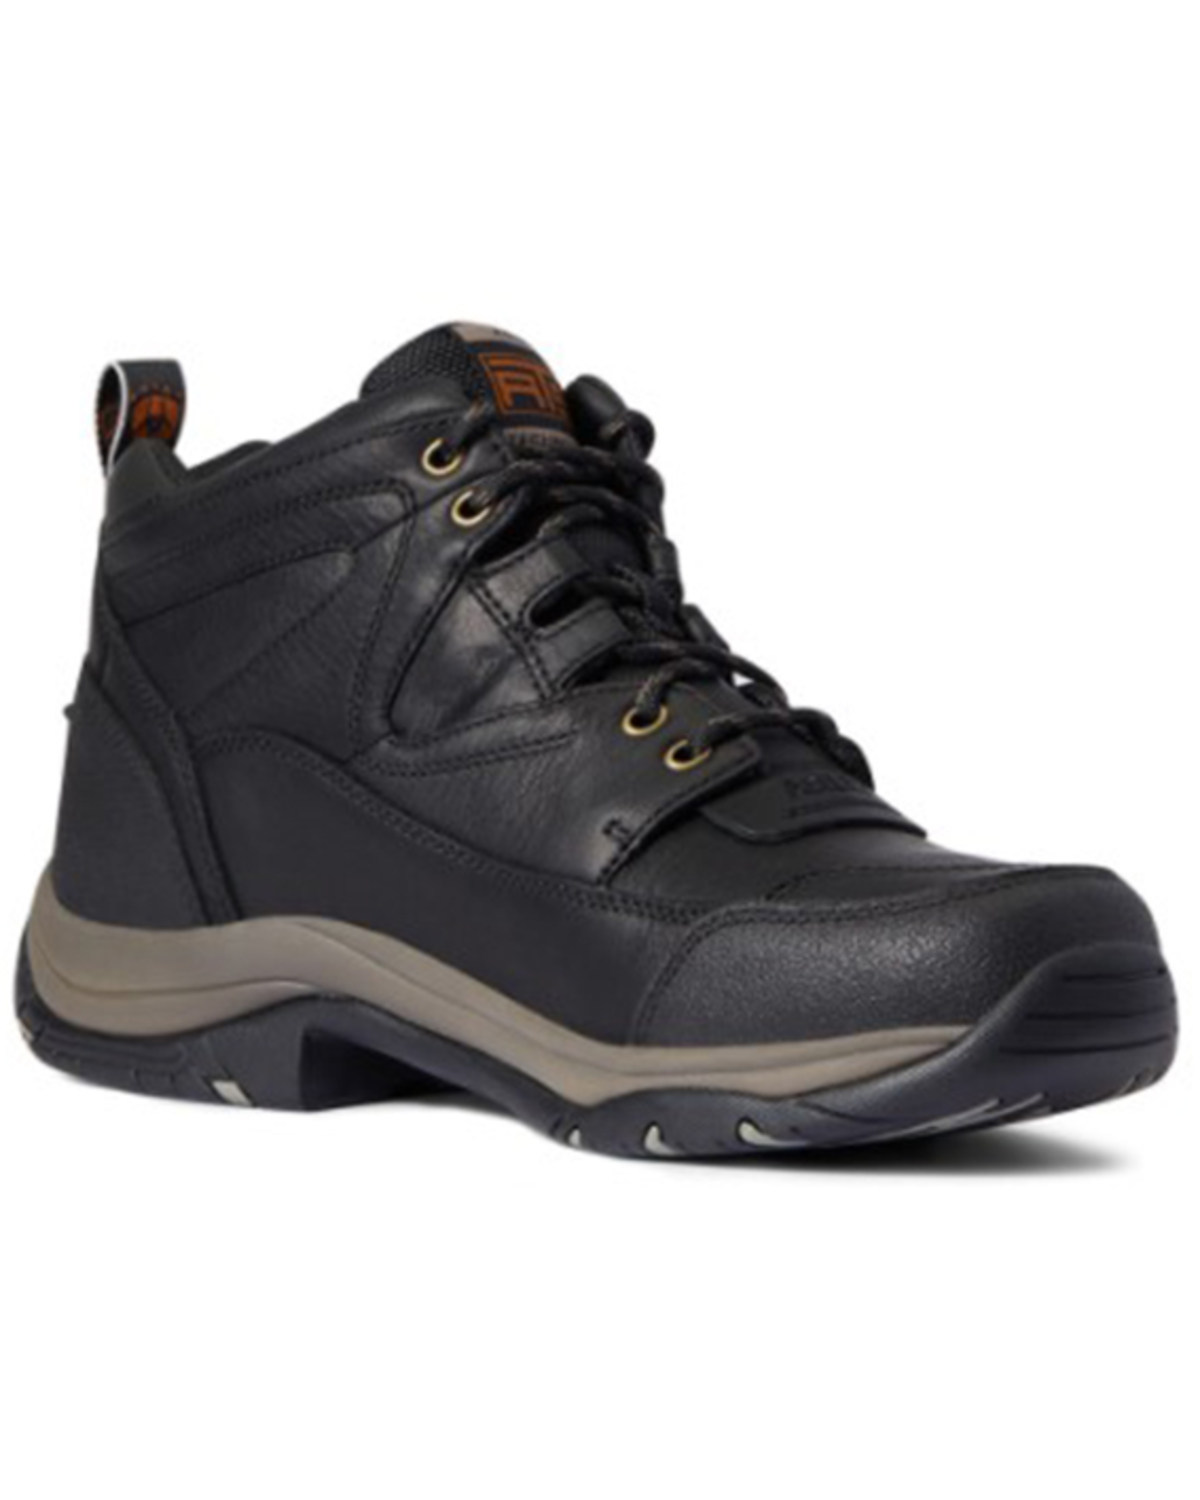 Ariat Men's Terrain Waterproof Hiking Boots - Soft Toe